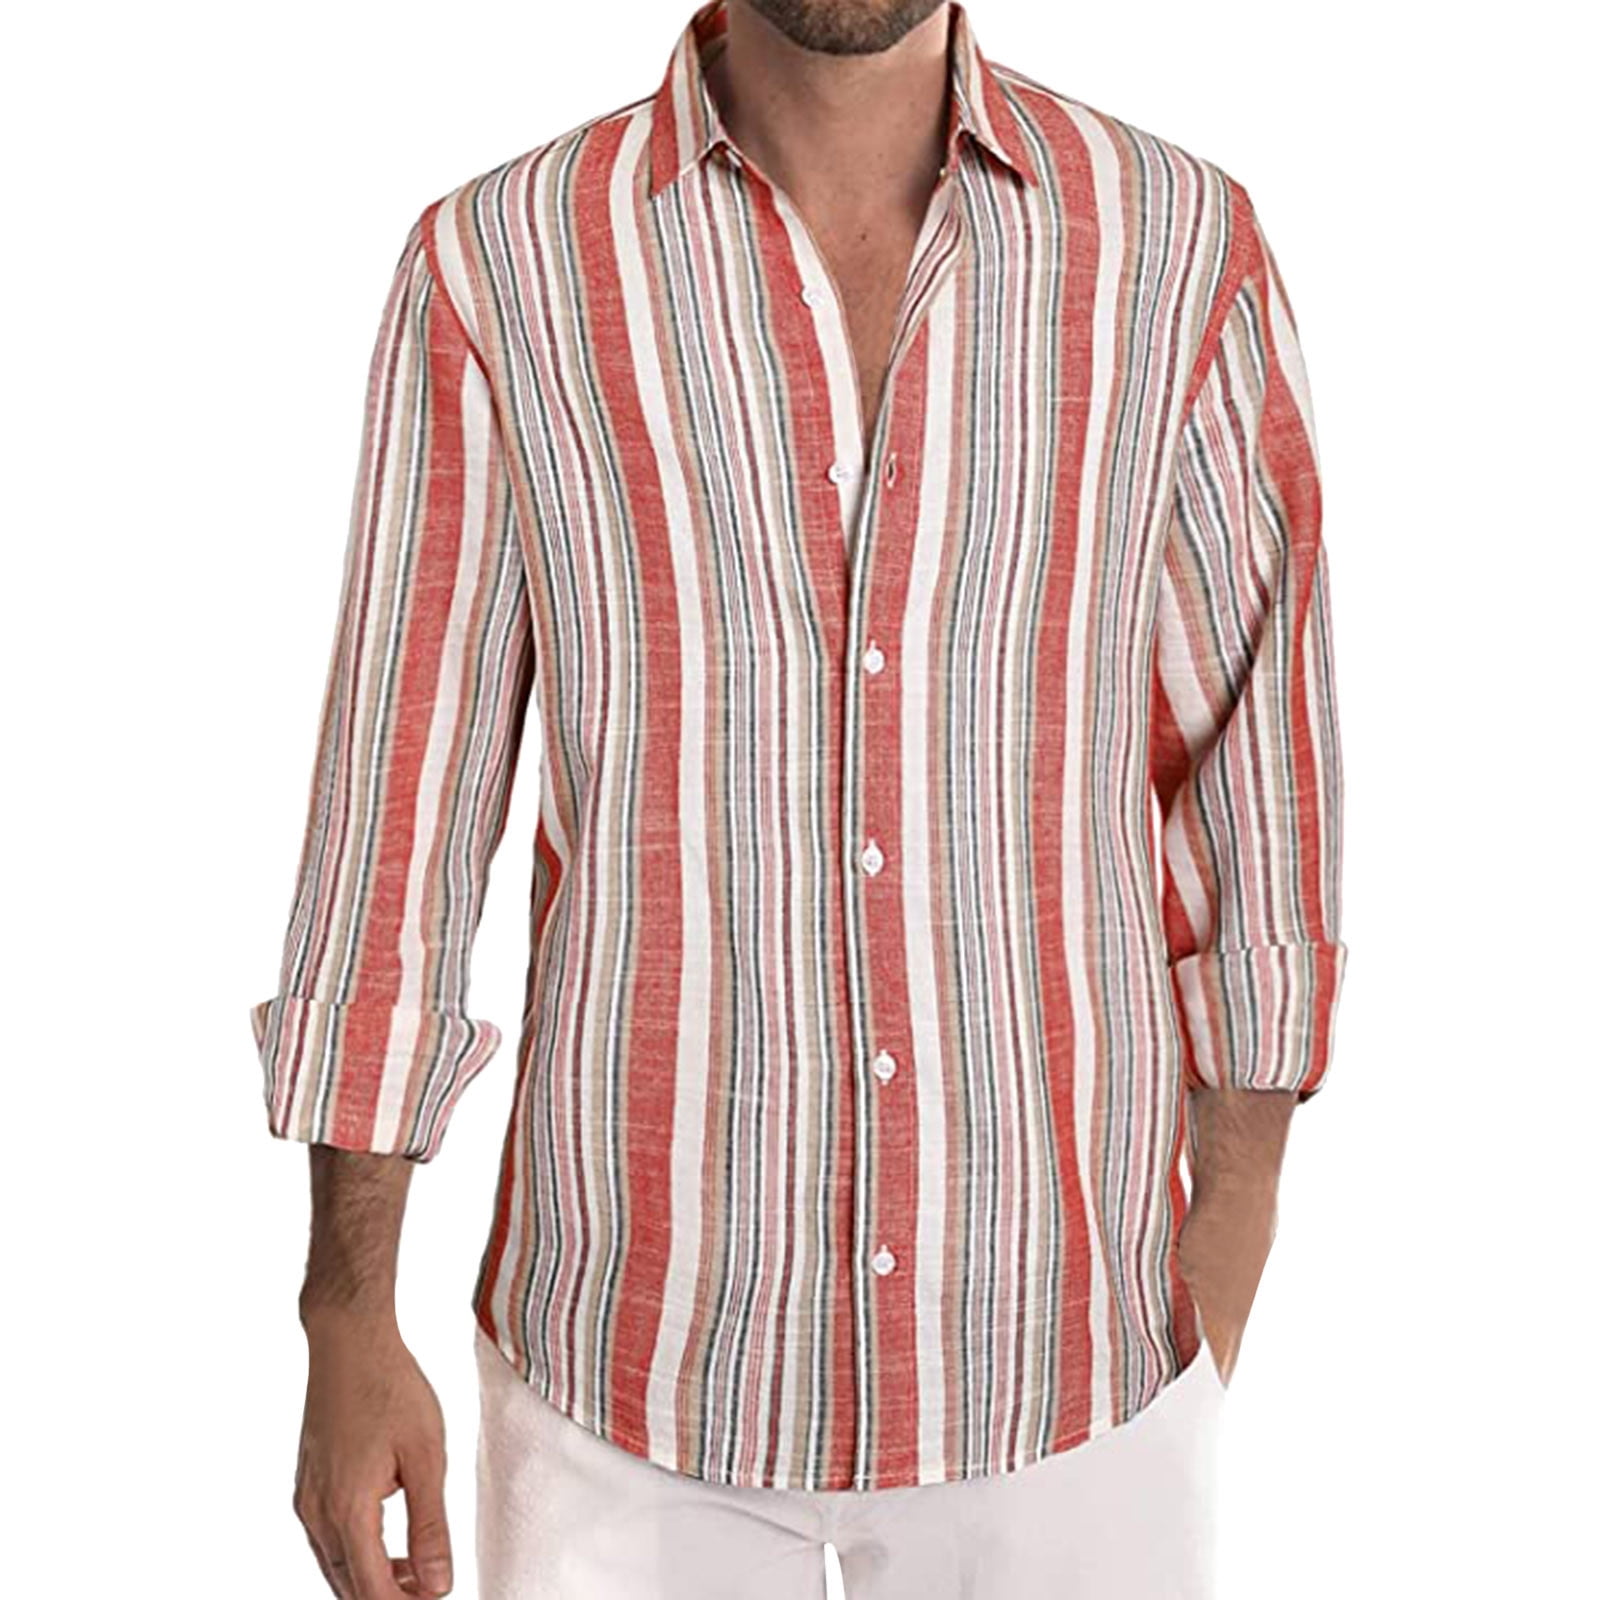 Larisalt Shirts For Men Long Sleeve,Men's Muscle Dress Shirts Slim Fit ...